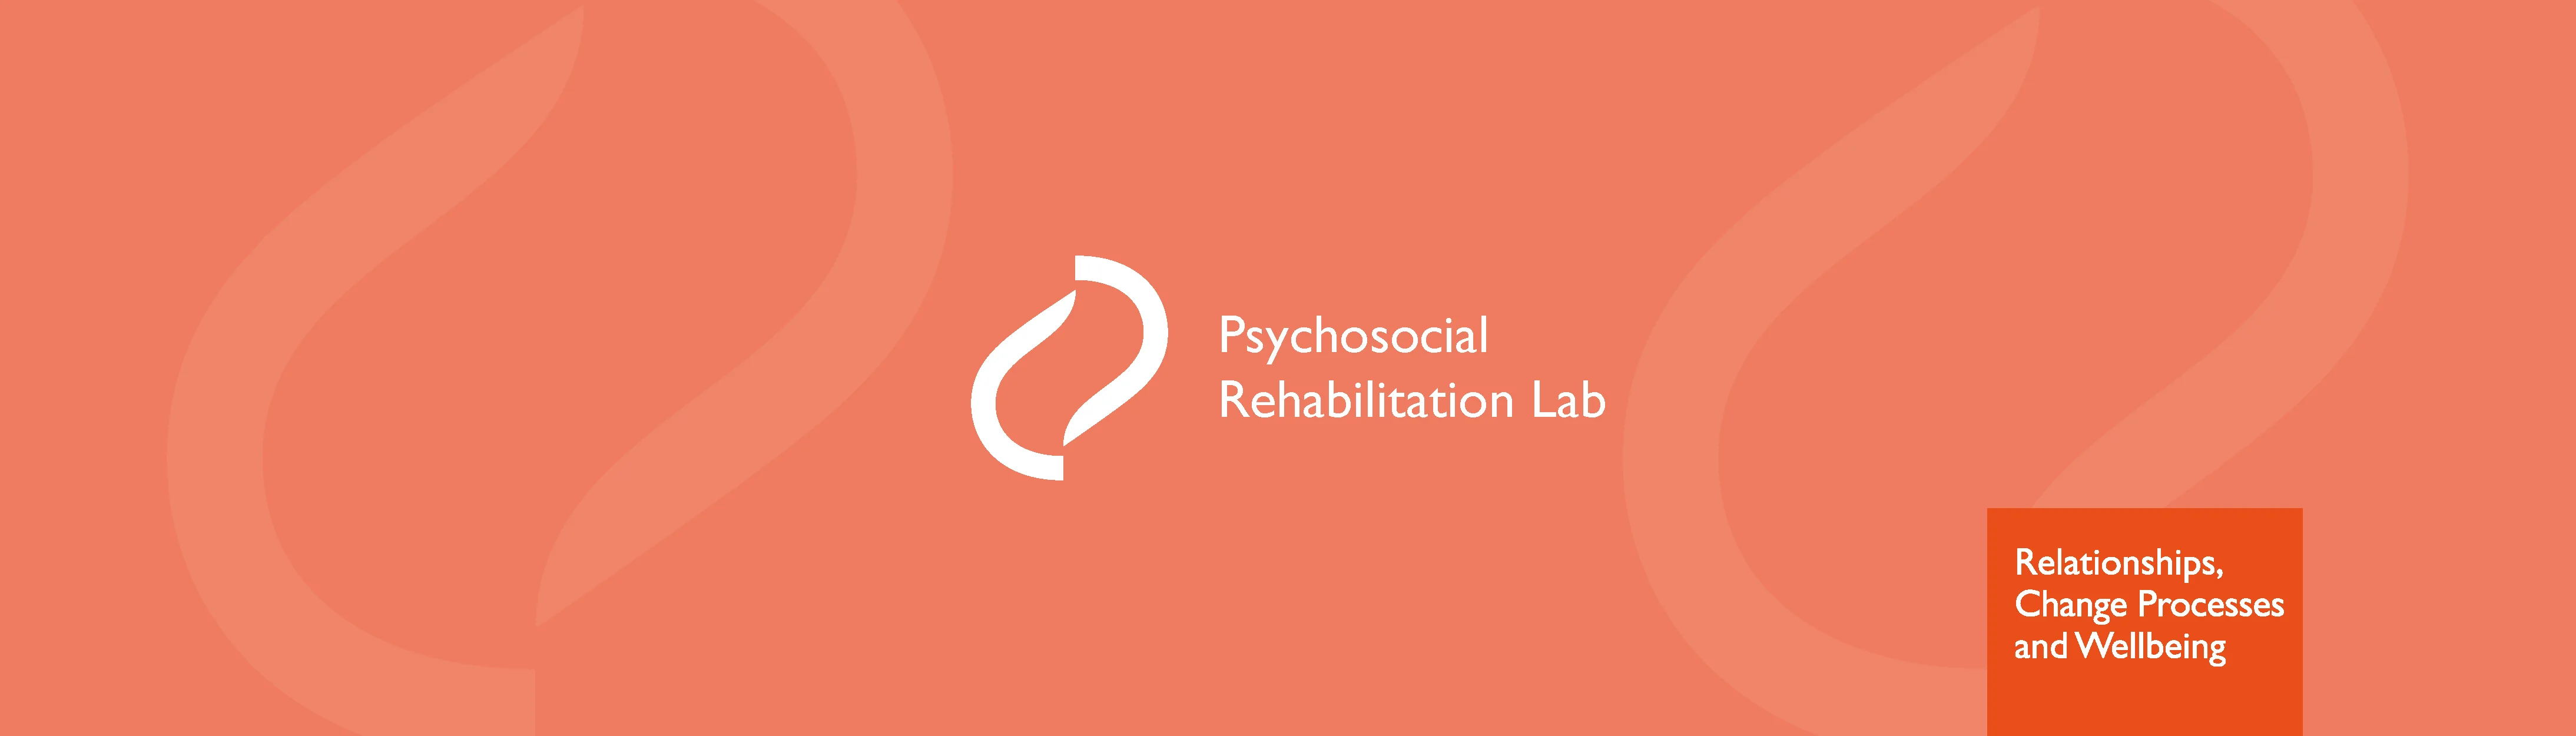 Psychosocial Rehabilitation Lab logo